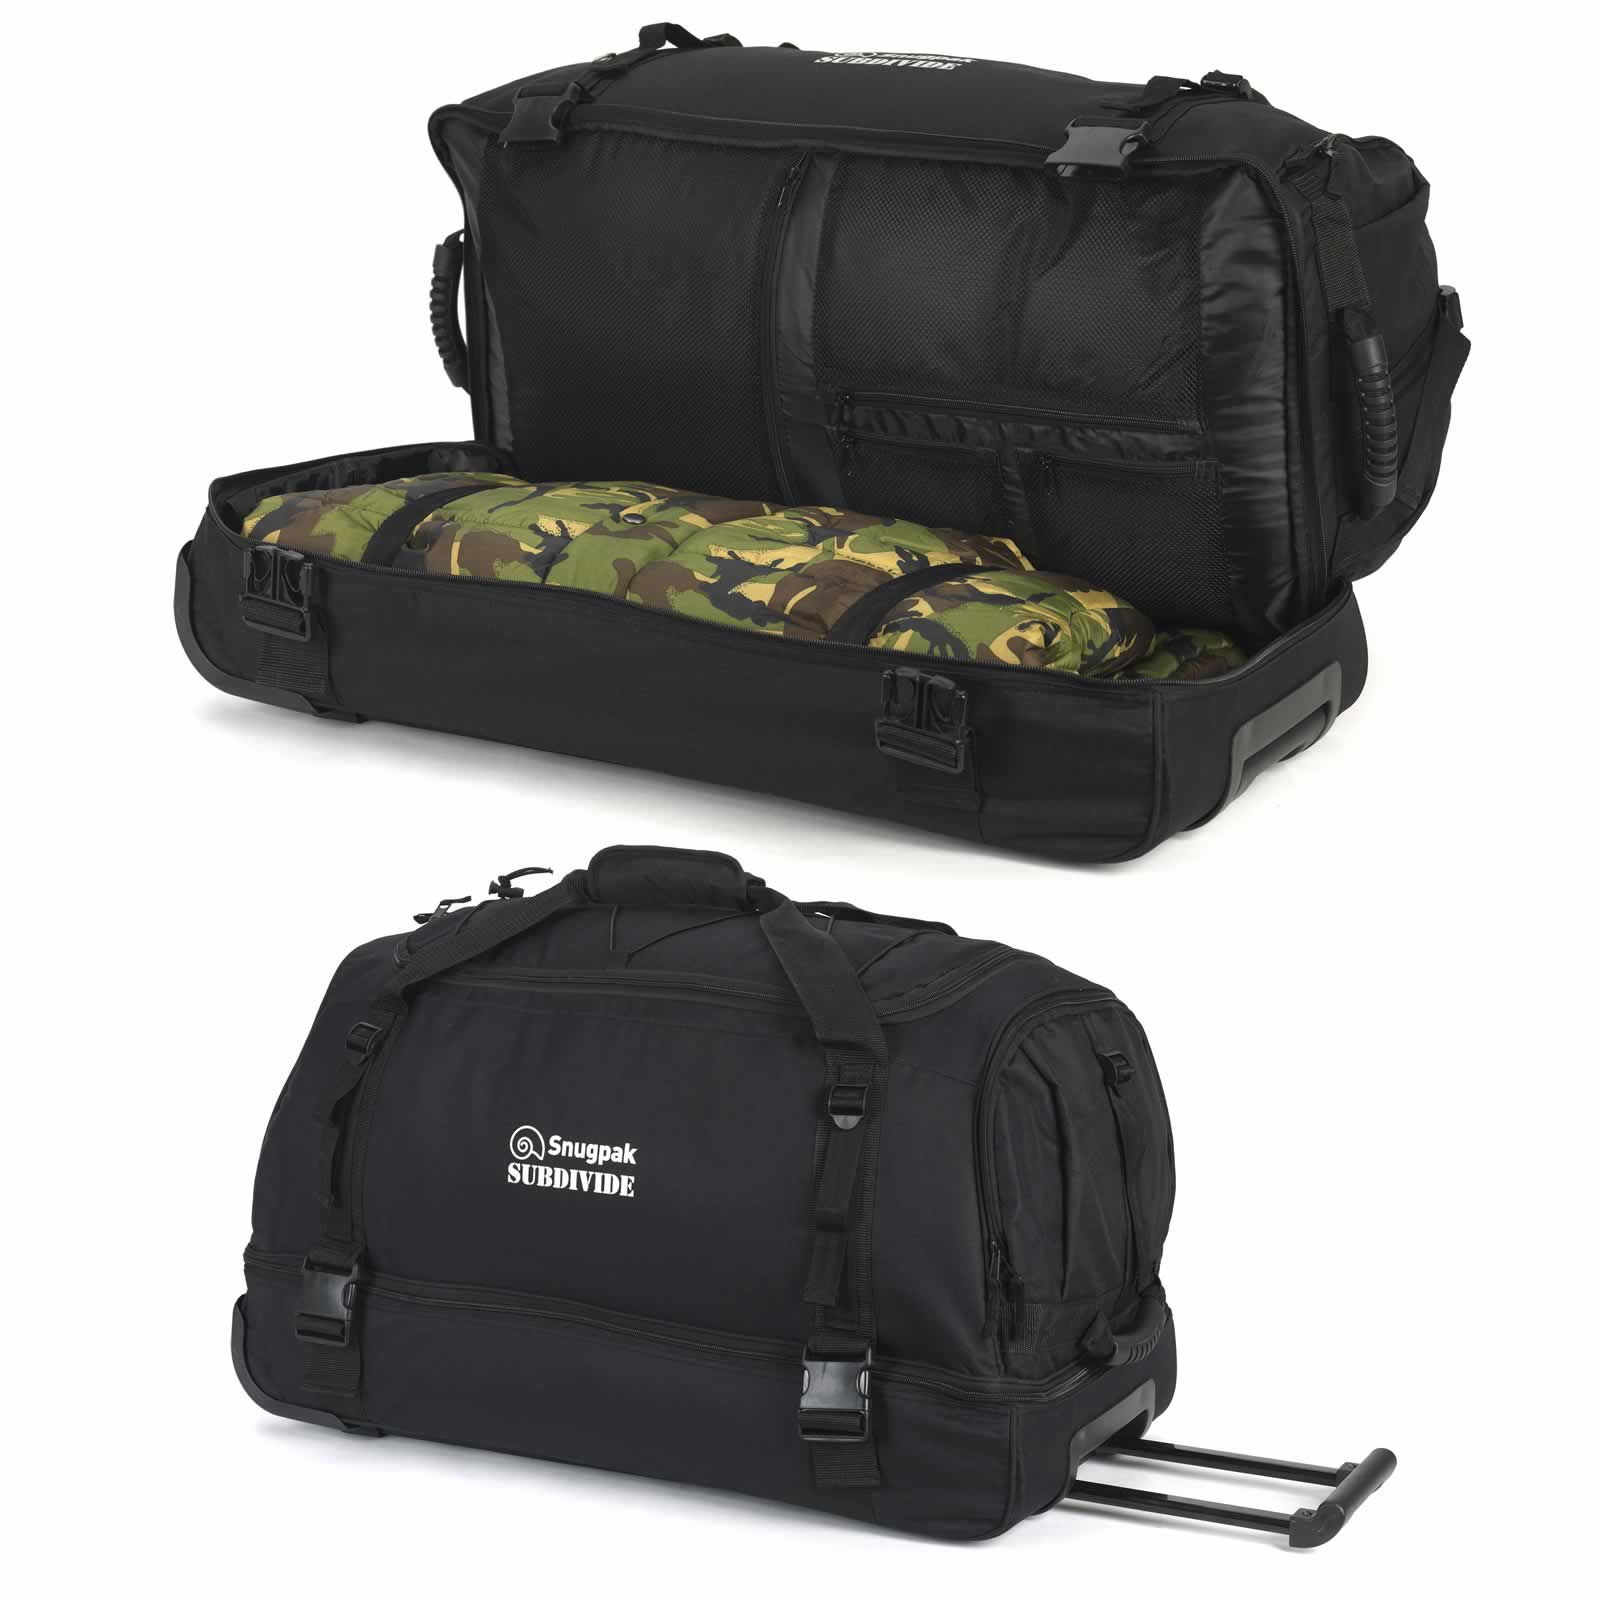 Snugpak Subdivide Roller Military Large Wheeled Holdall Travel Kit Bag Luggage 8211652010008 | eBay